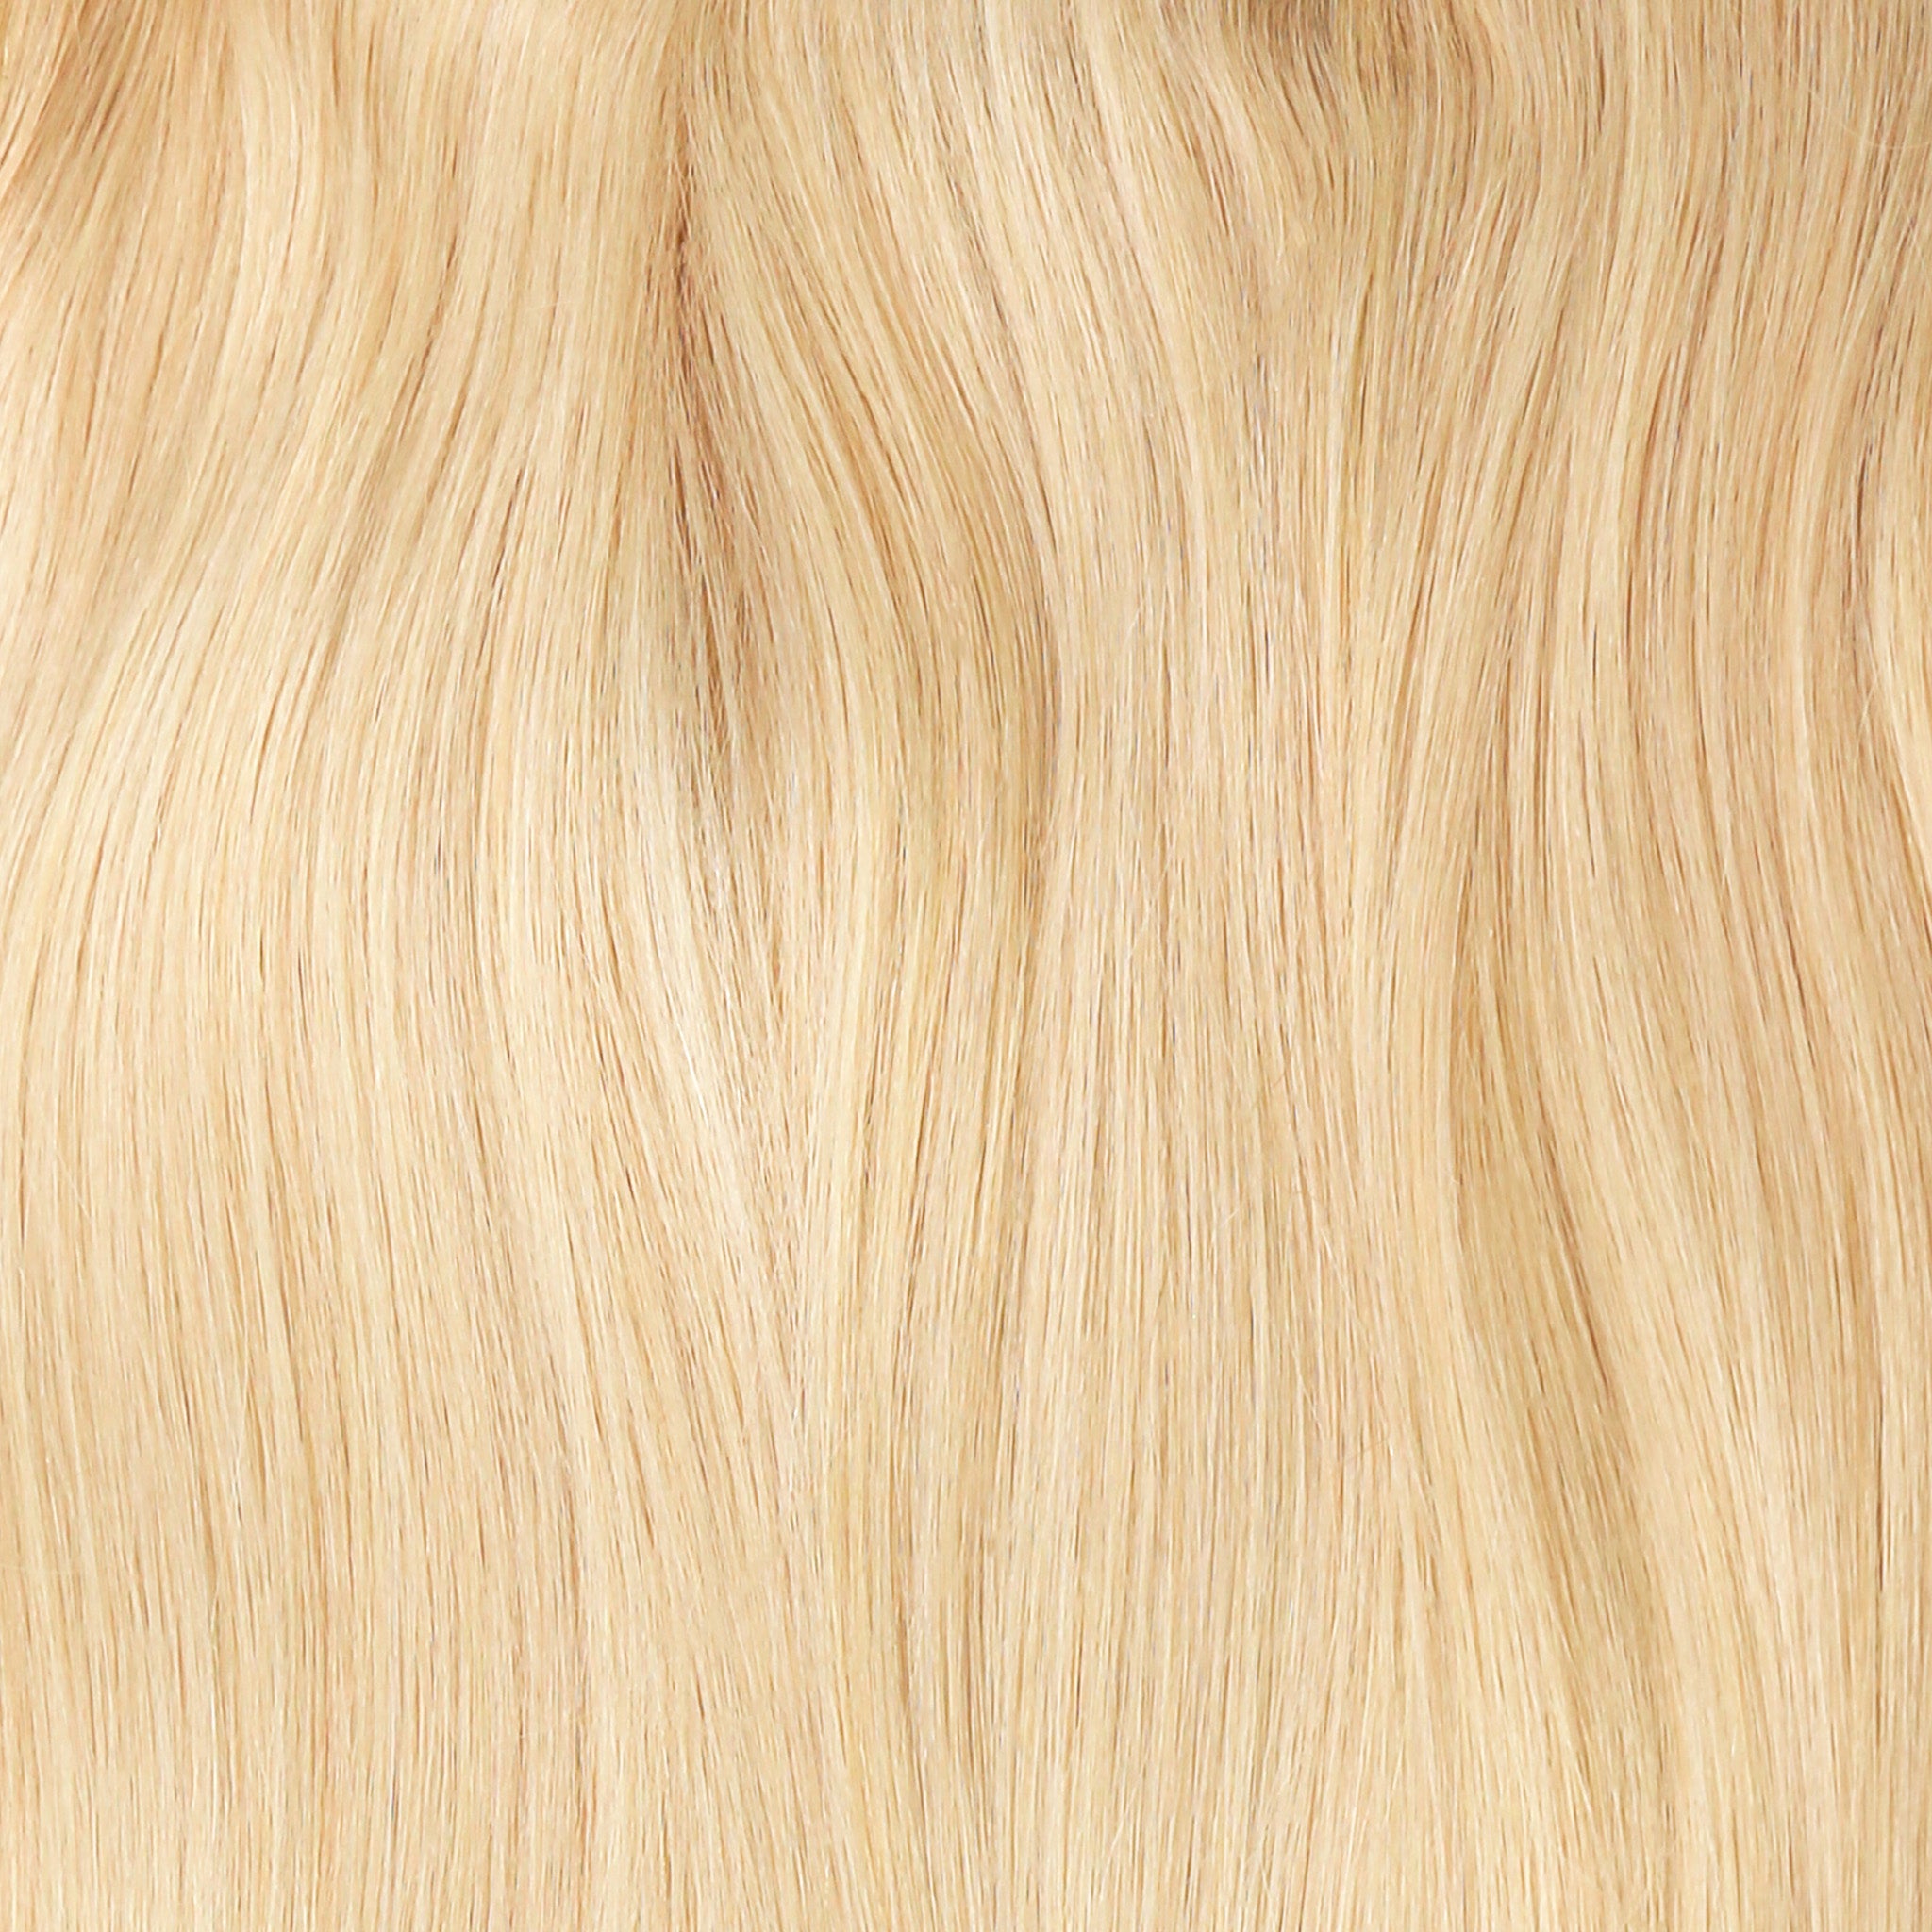 #24 Ponytail Hair Extension